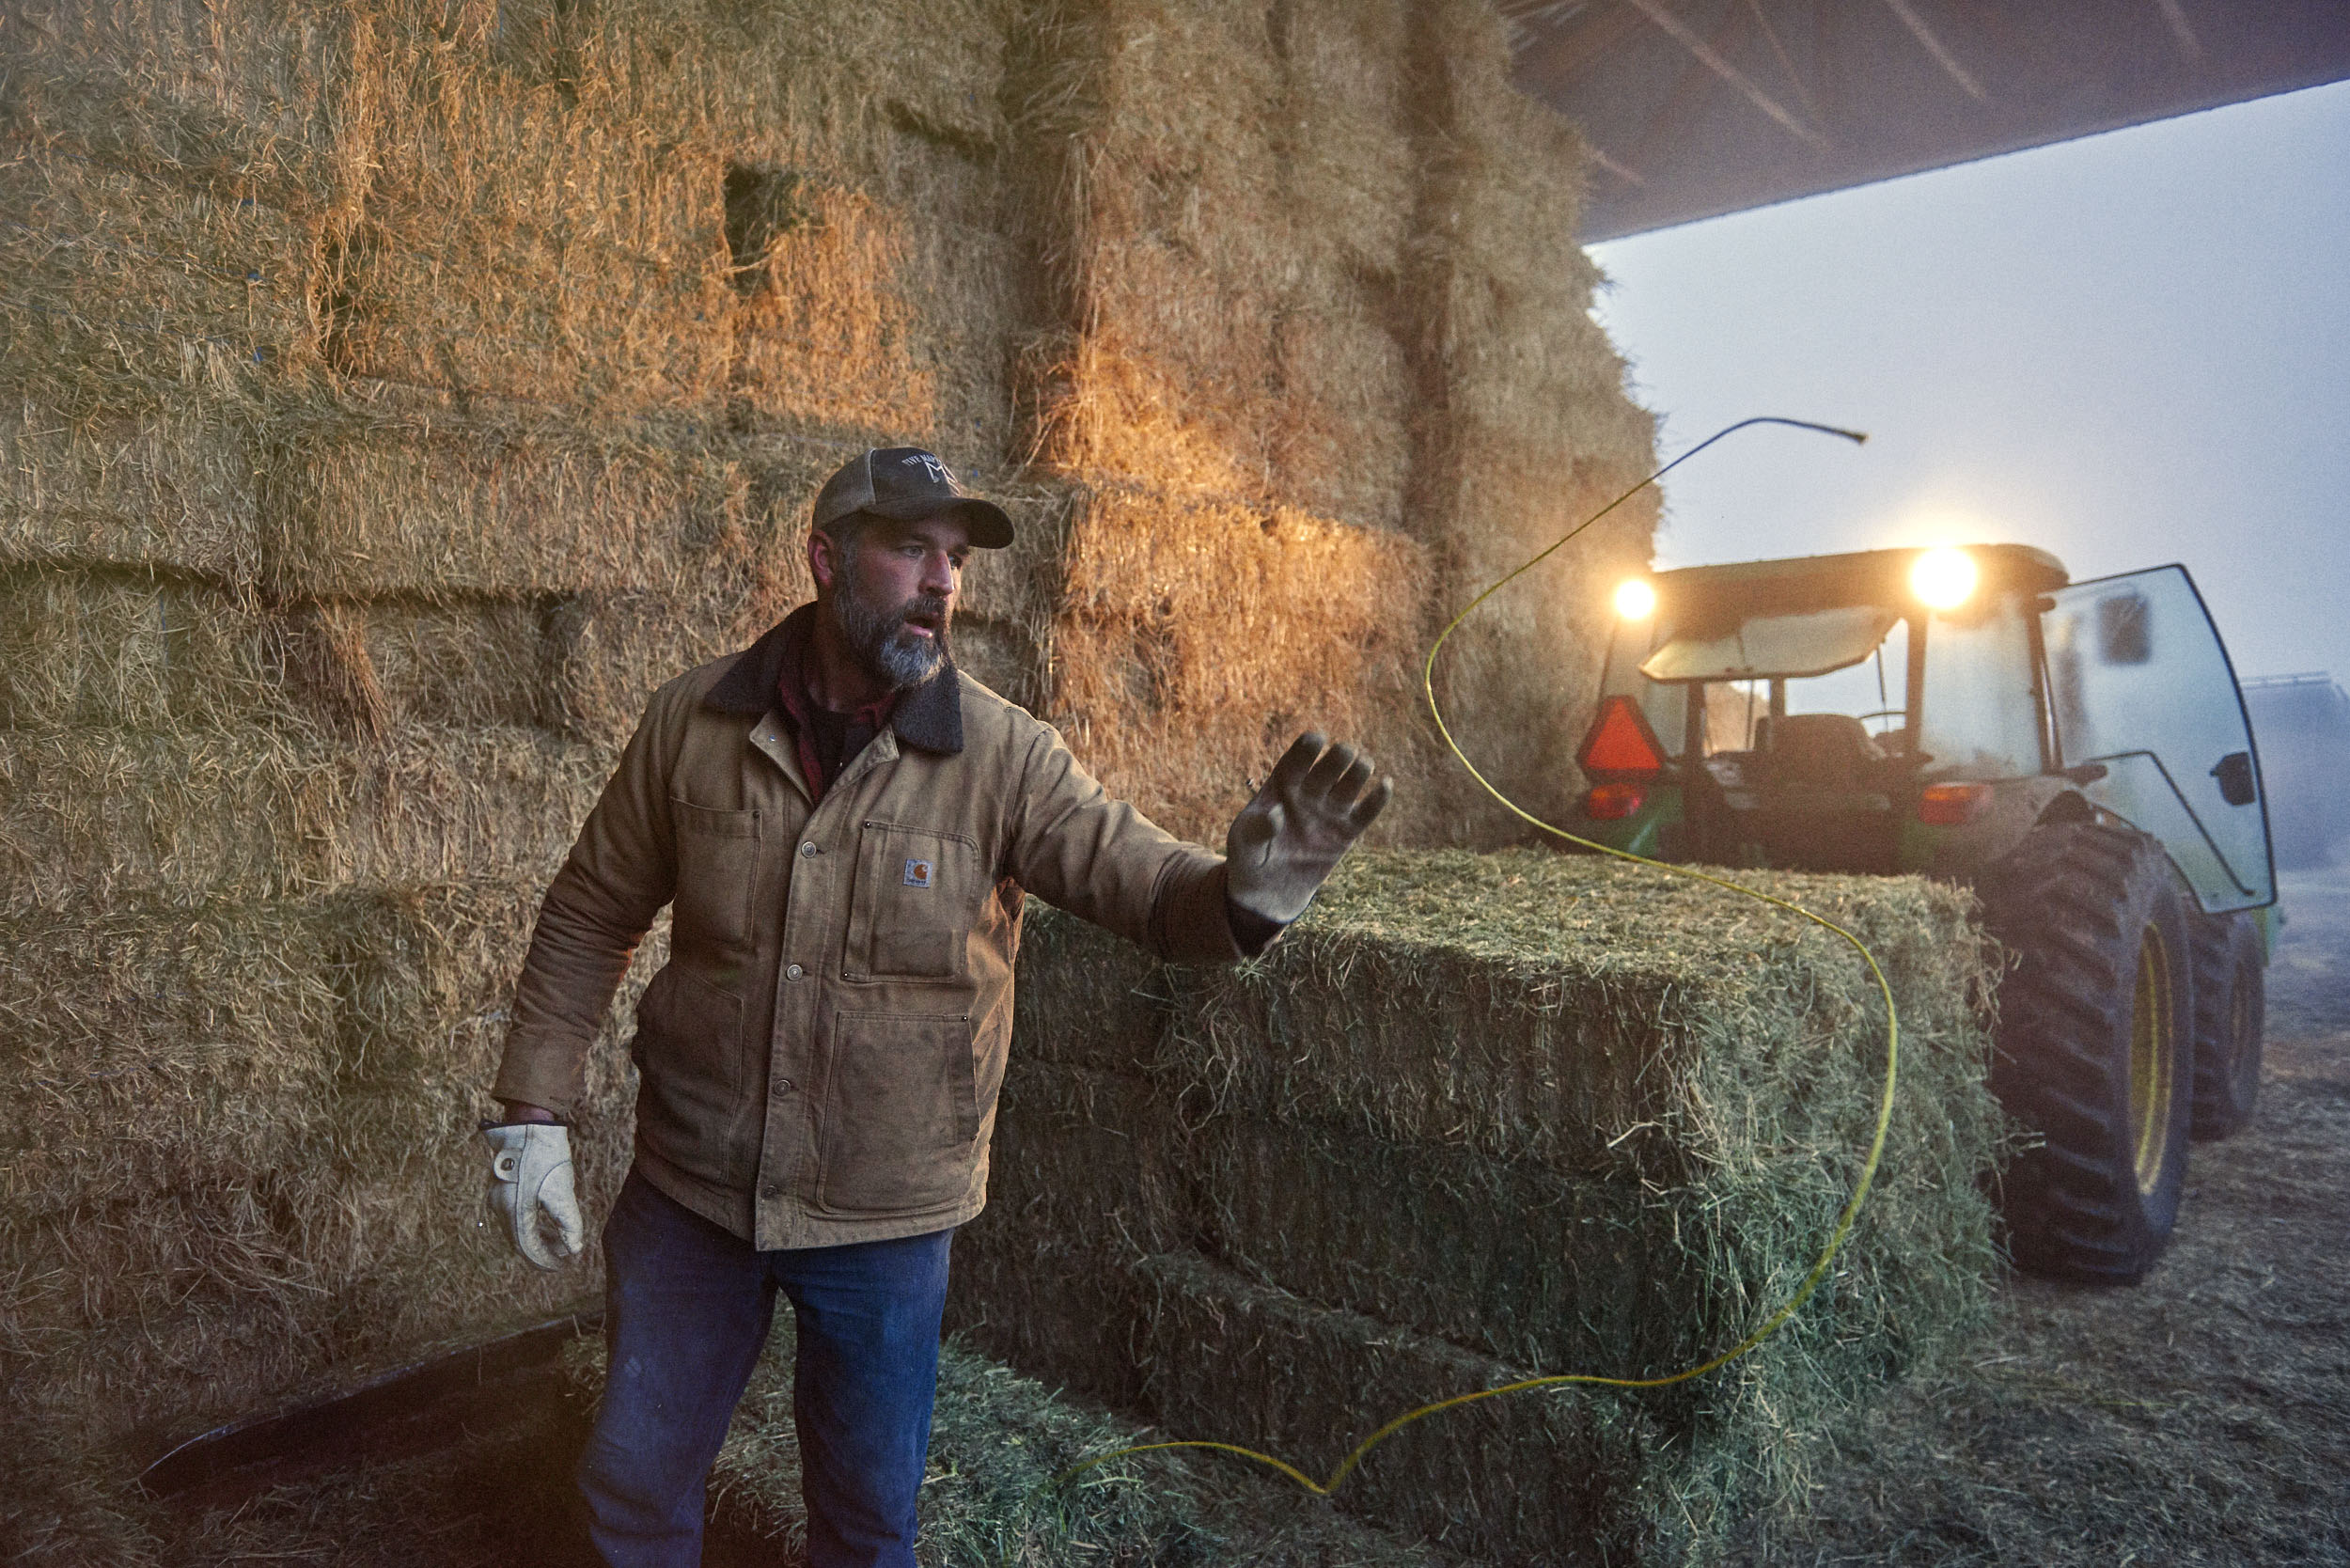 Carhartt environmental farm portrait photography